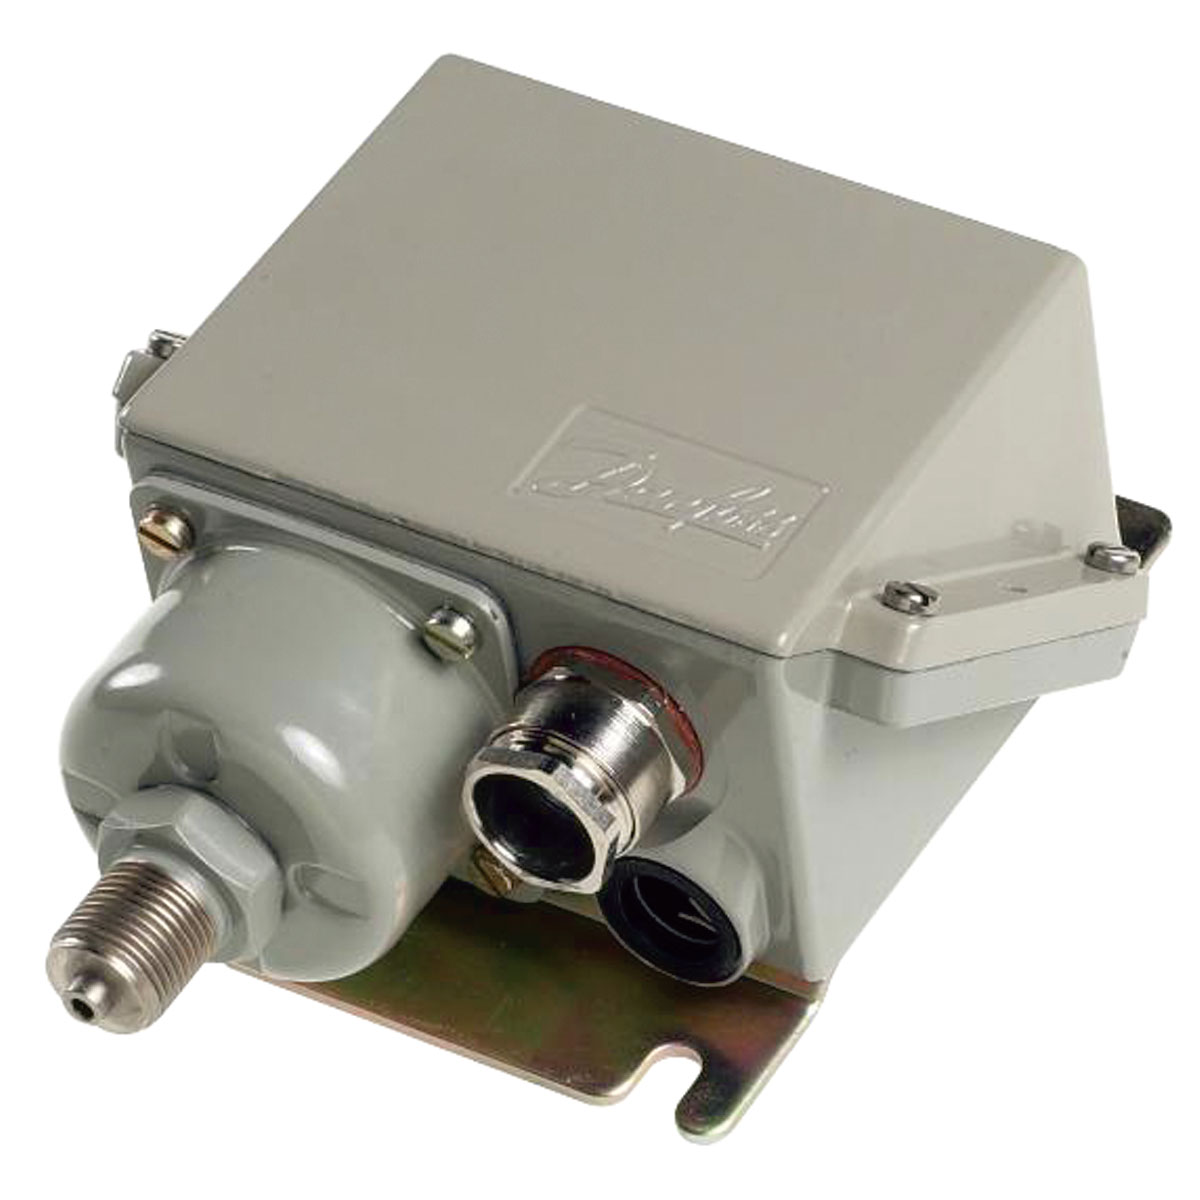 KPS43-3120 Pressure Switch 1/4" 1-10 Bar